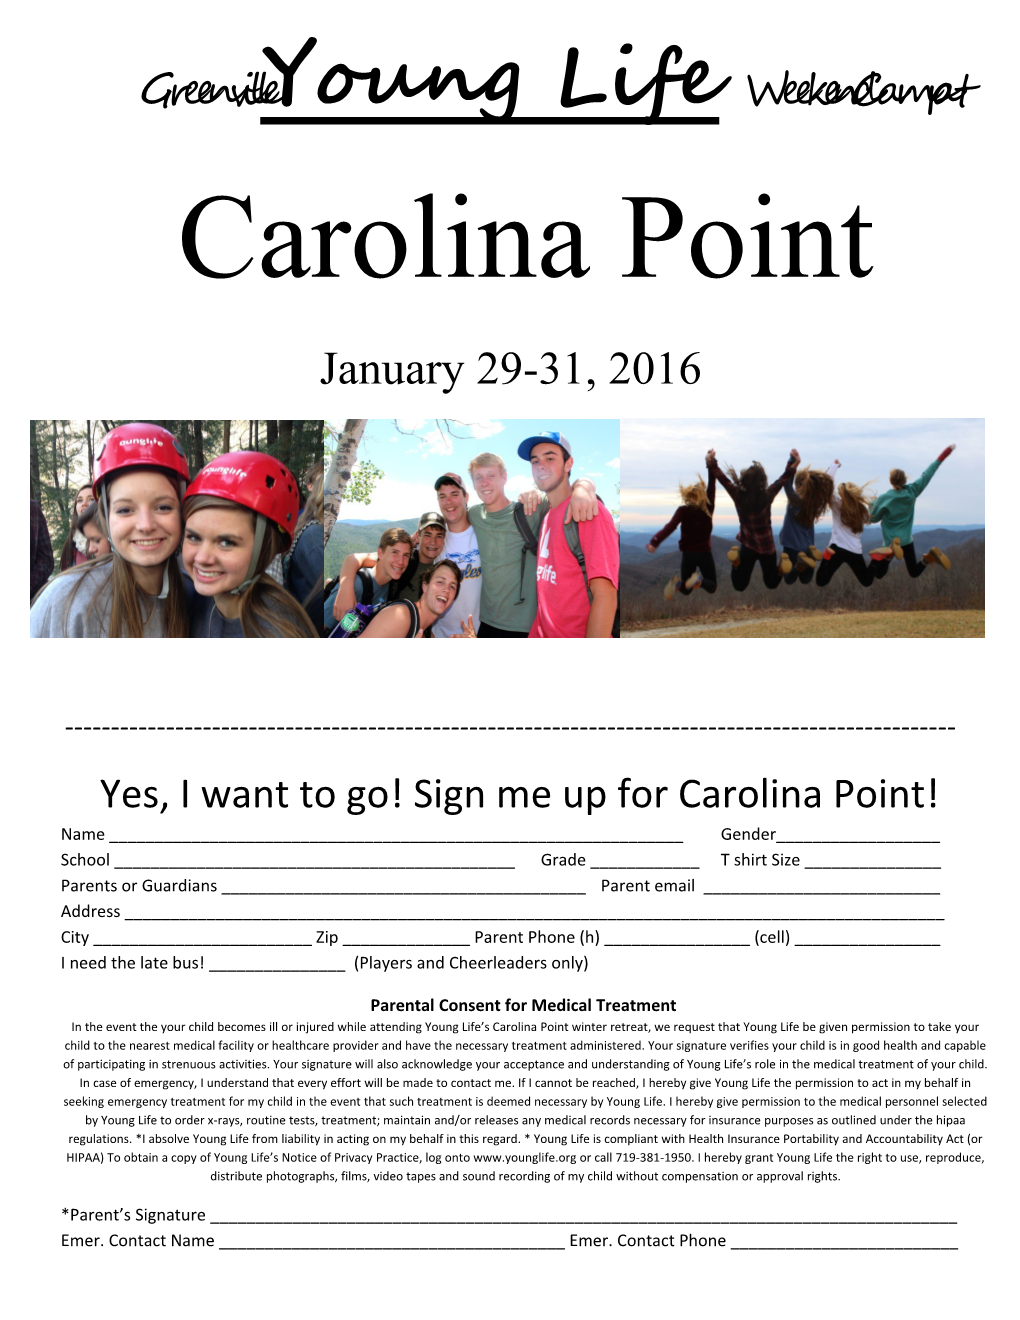 Carolina Point Weekend Camp Flyer